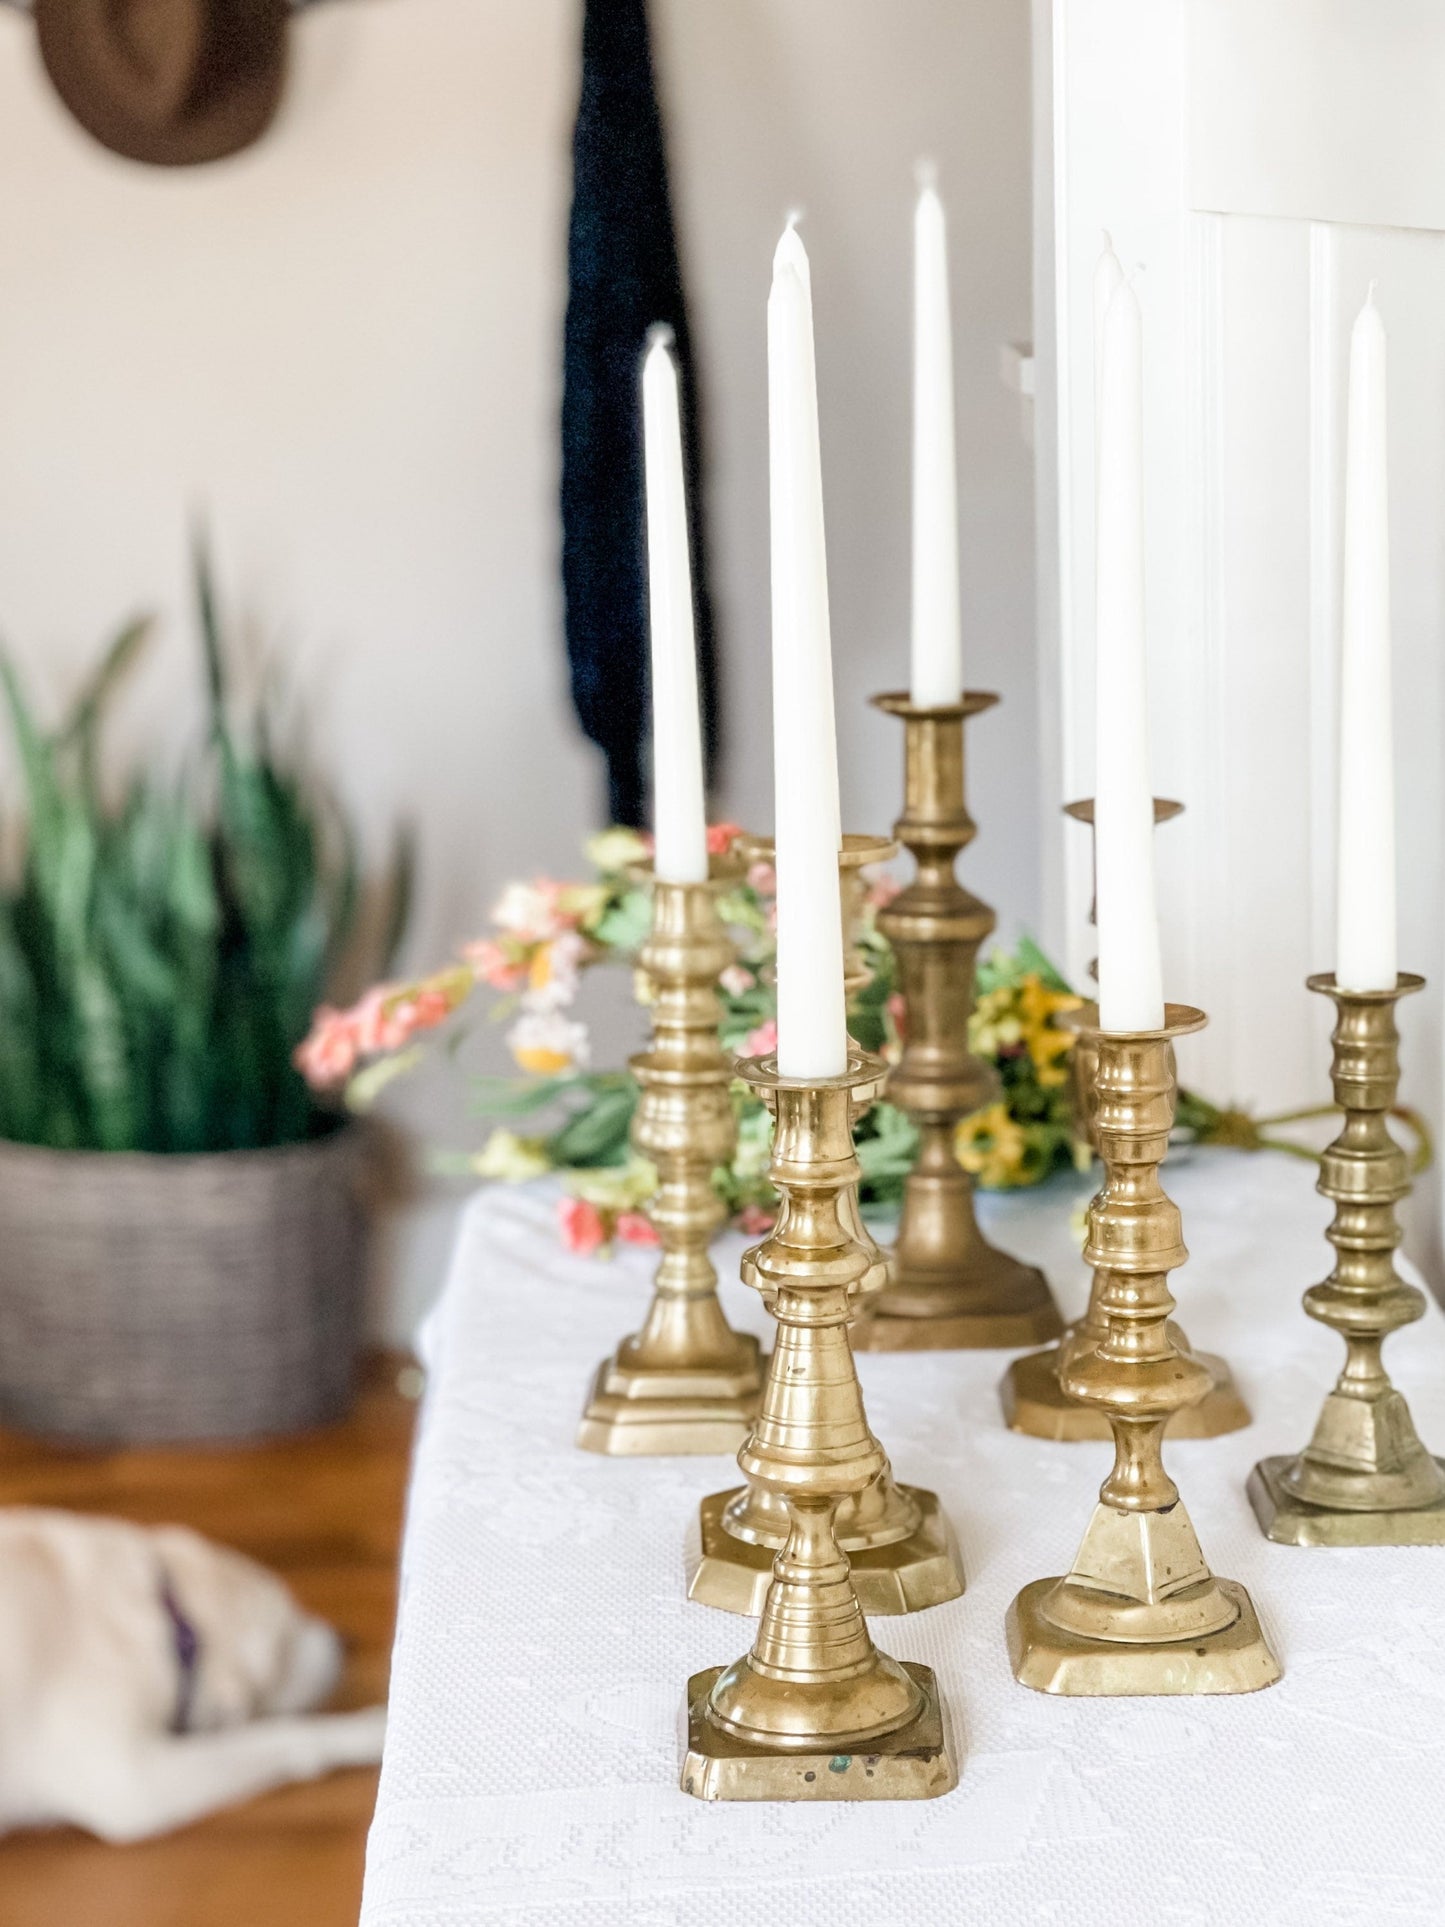 Brass Candlesticks, Vintage, Thanksgiving Table Decor, Holiday Decor